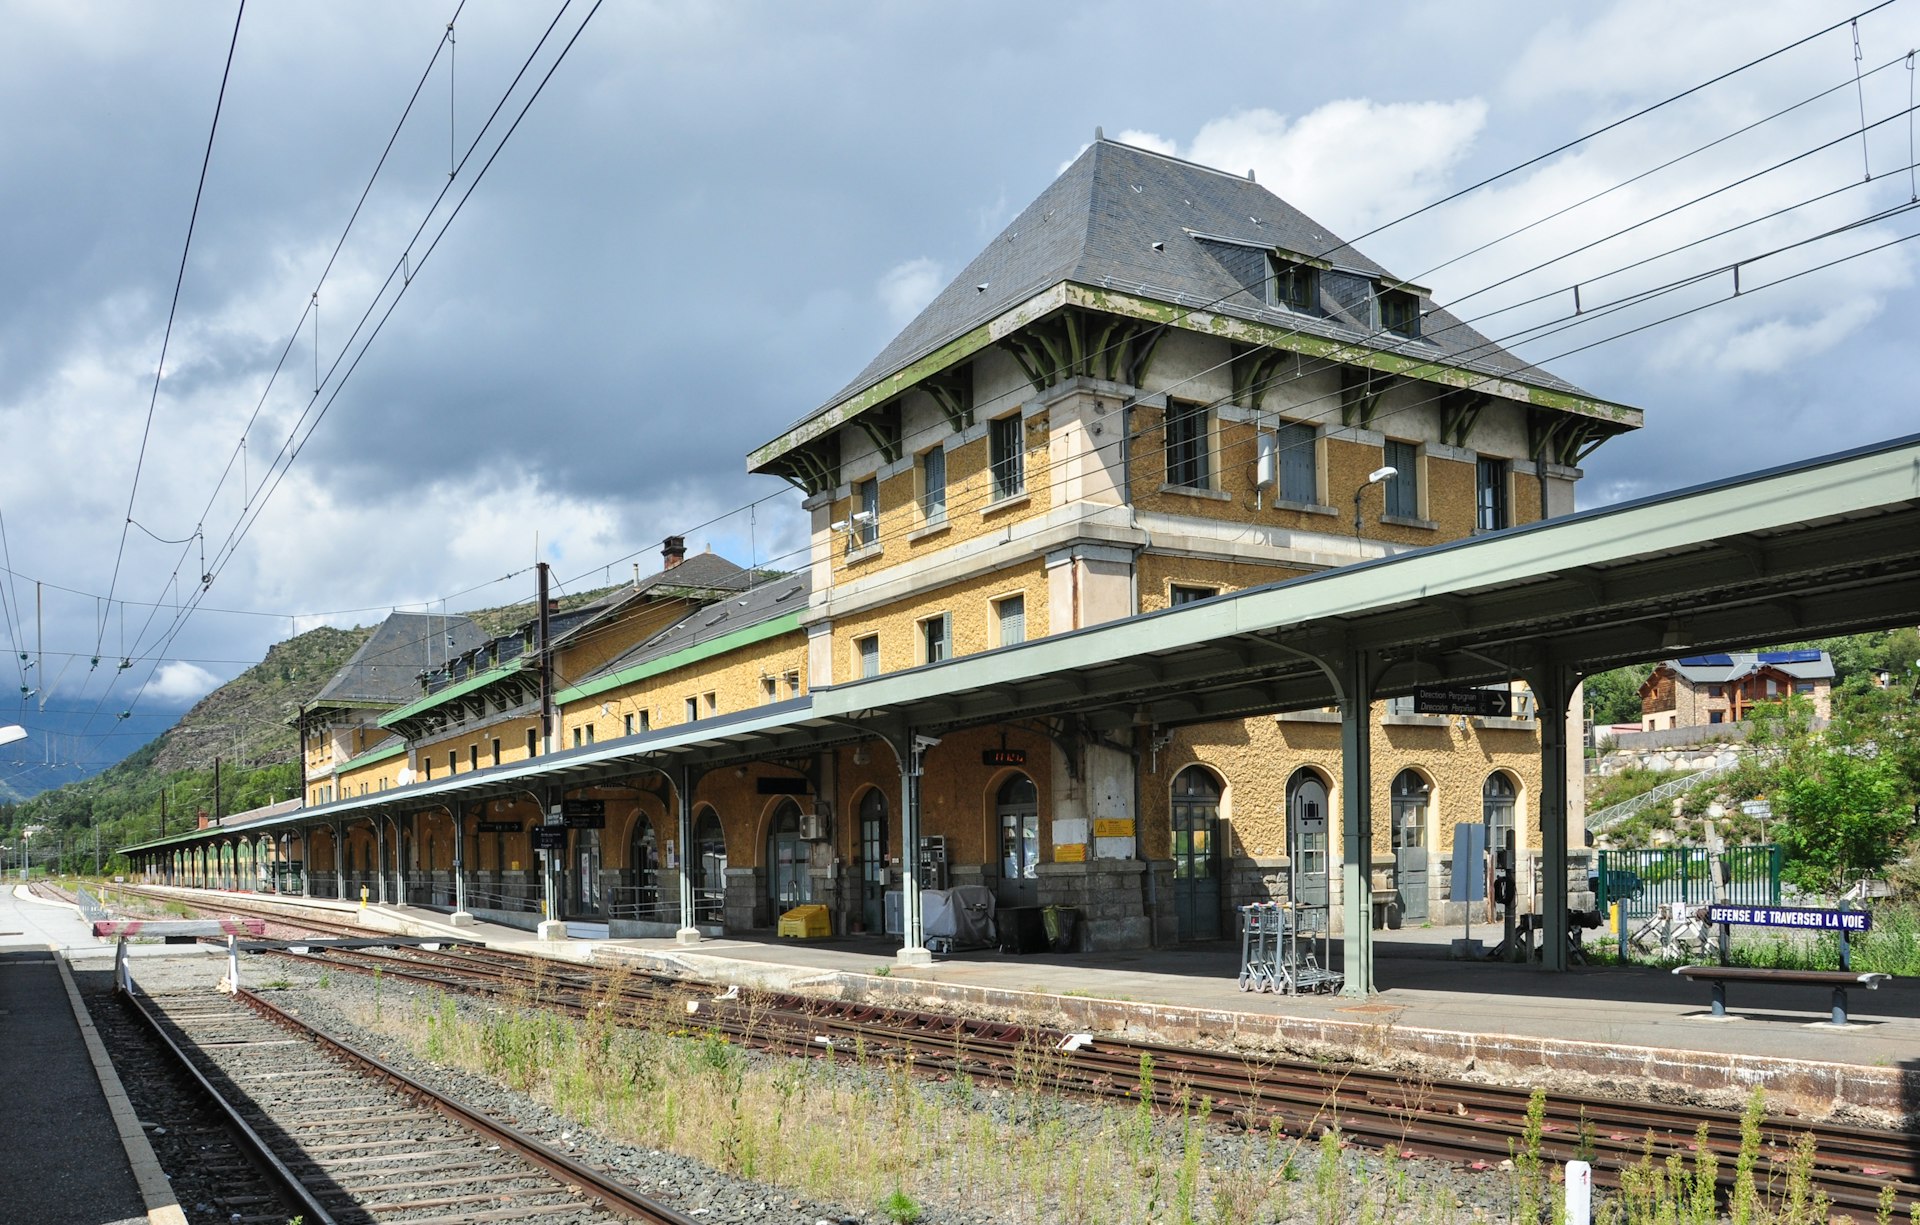 Railway station platforms and track at Latour-de-Carol, Pyrenées-Orientales, Occitanie, France